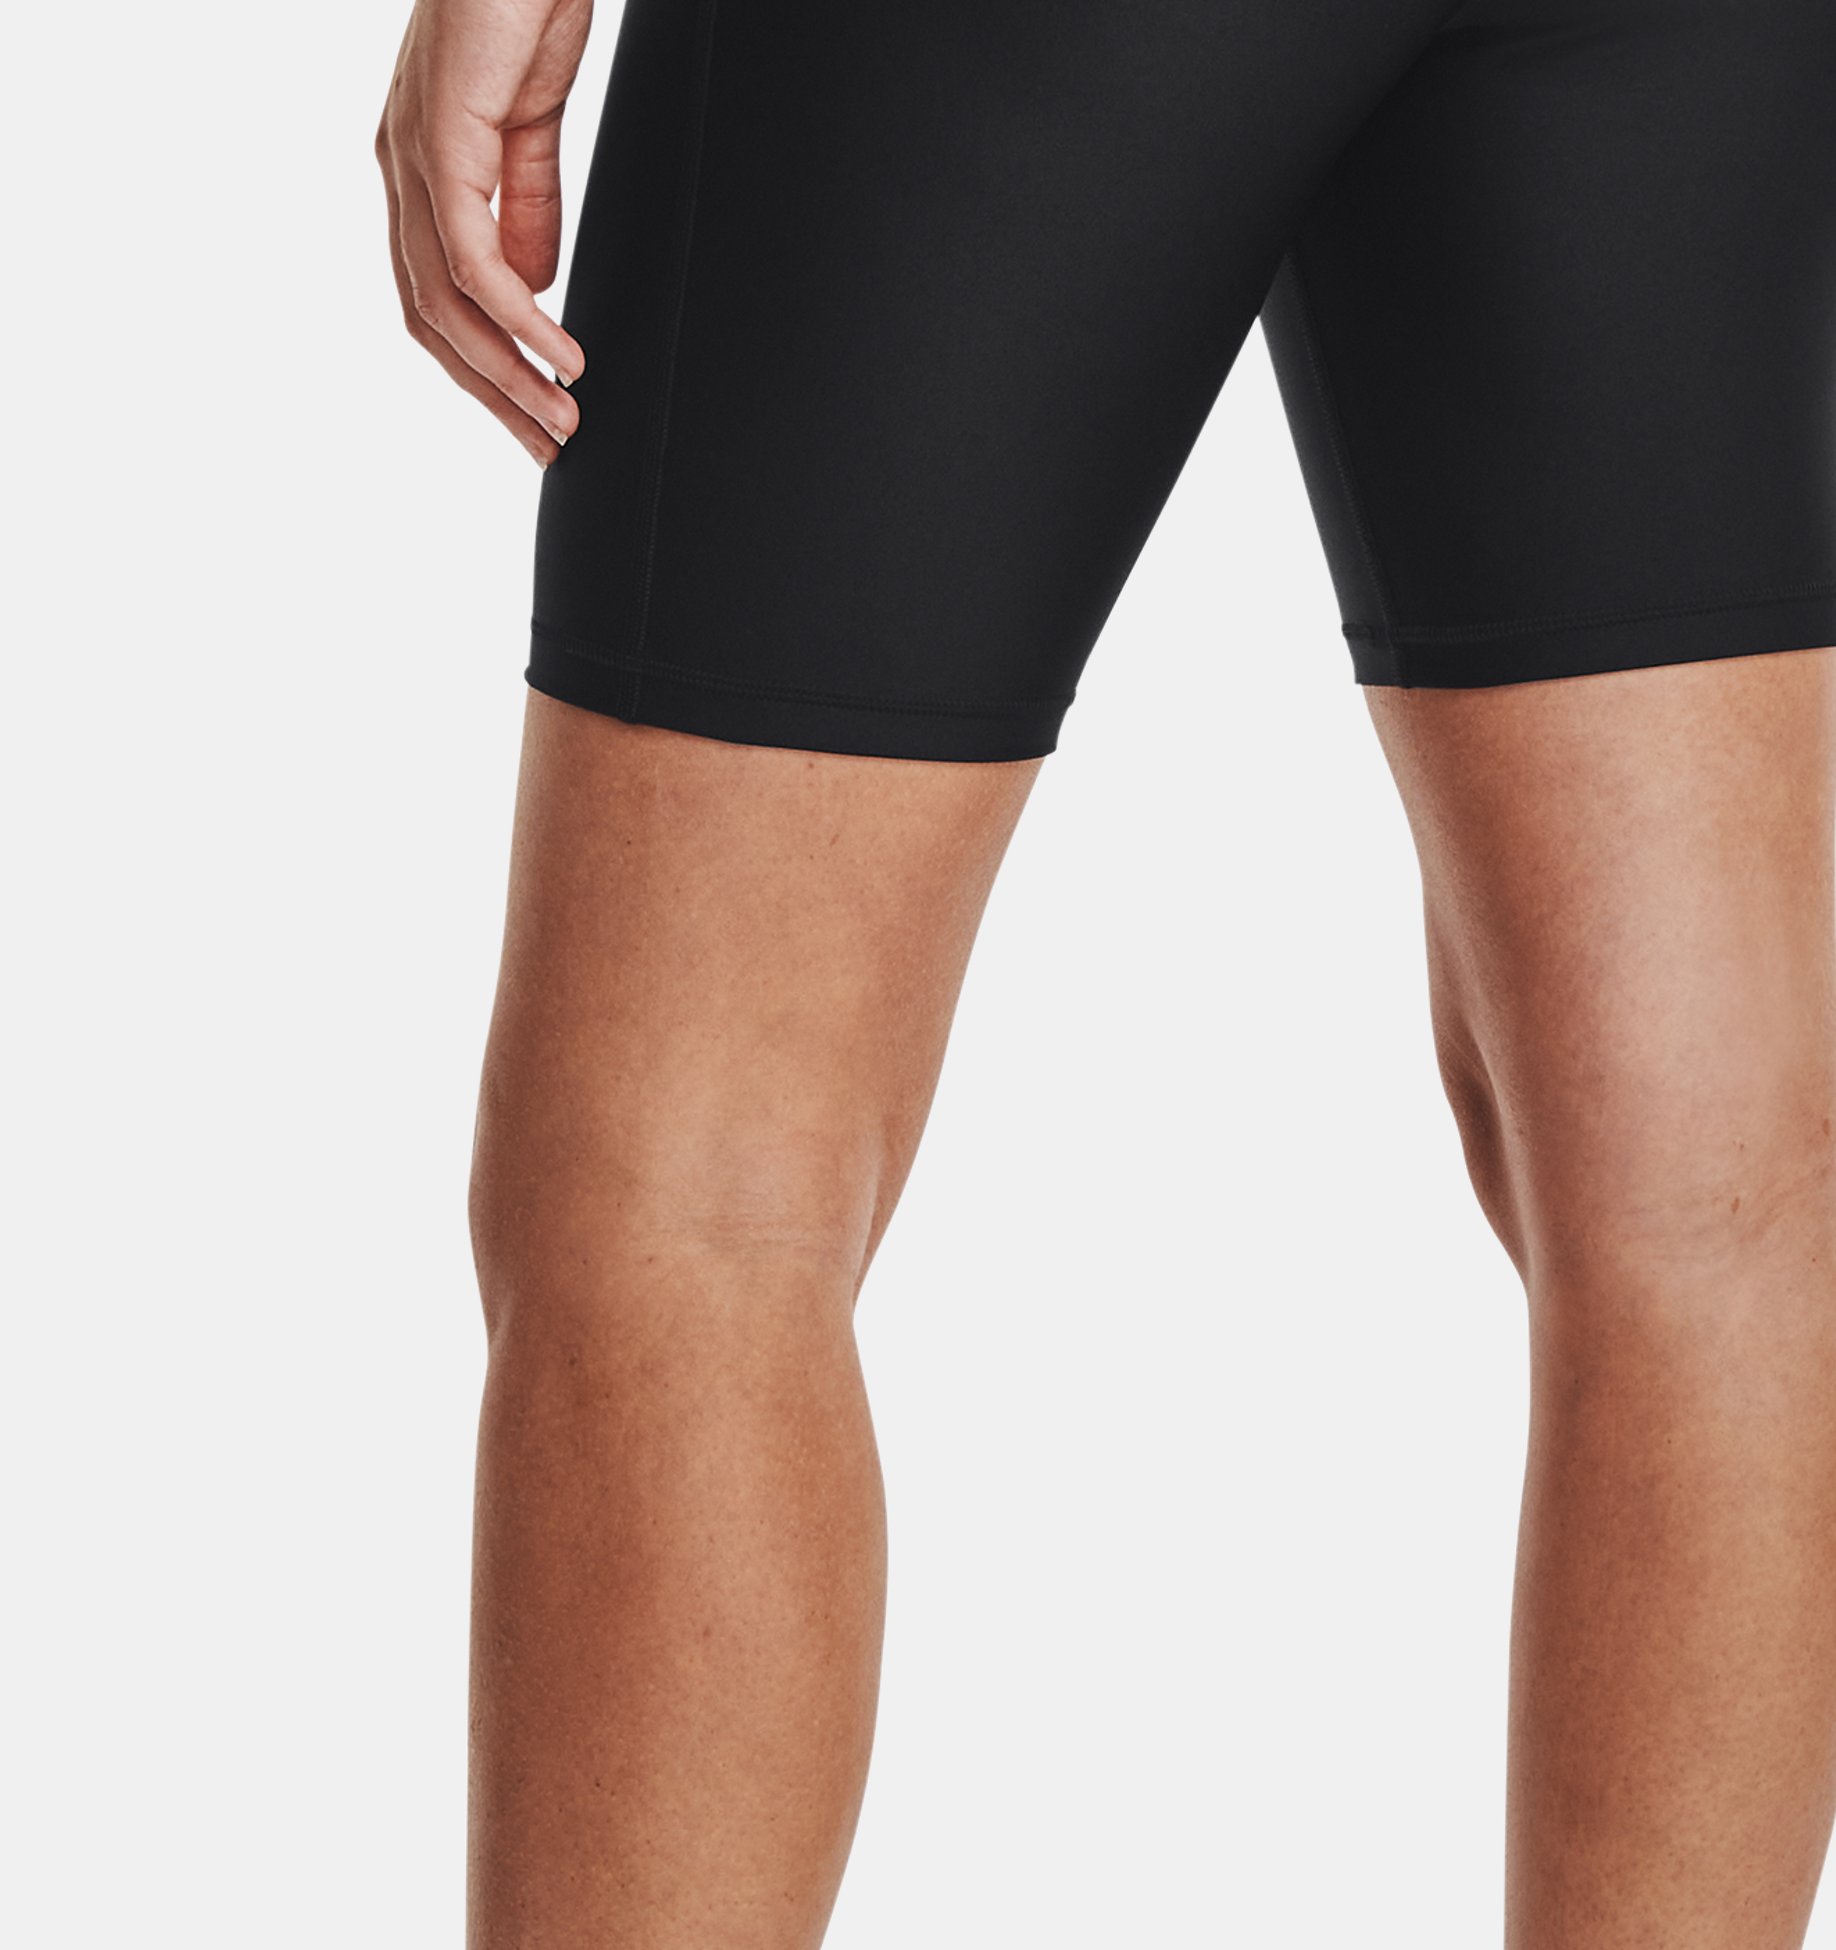 Women's HeatGear® Bike Shorts | Under Armour